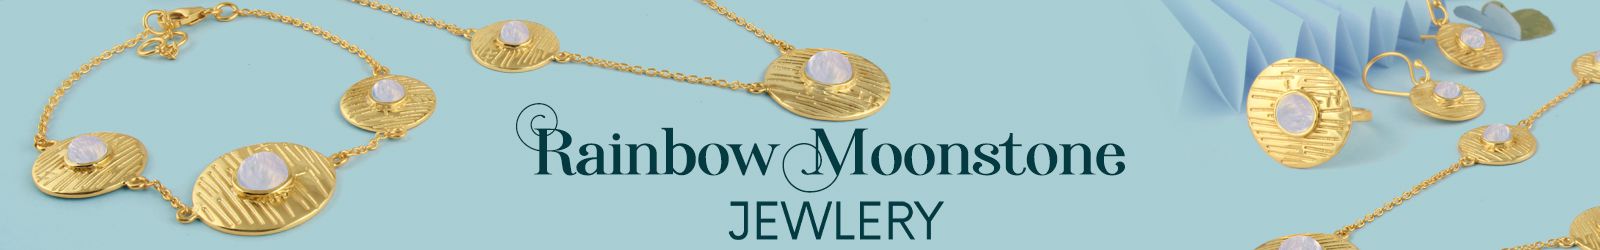 Silver Rainbow Moonstone Jewelry Wholesale Supplier